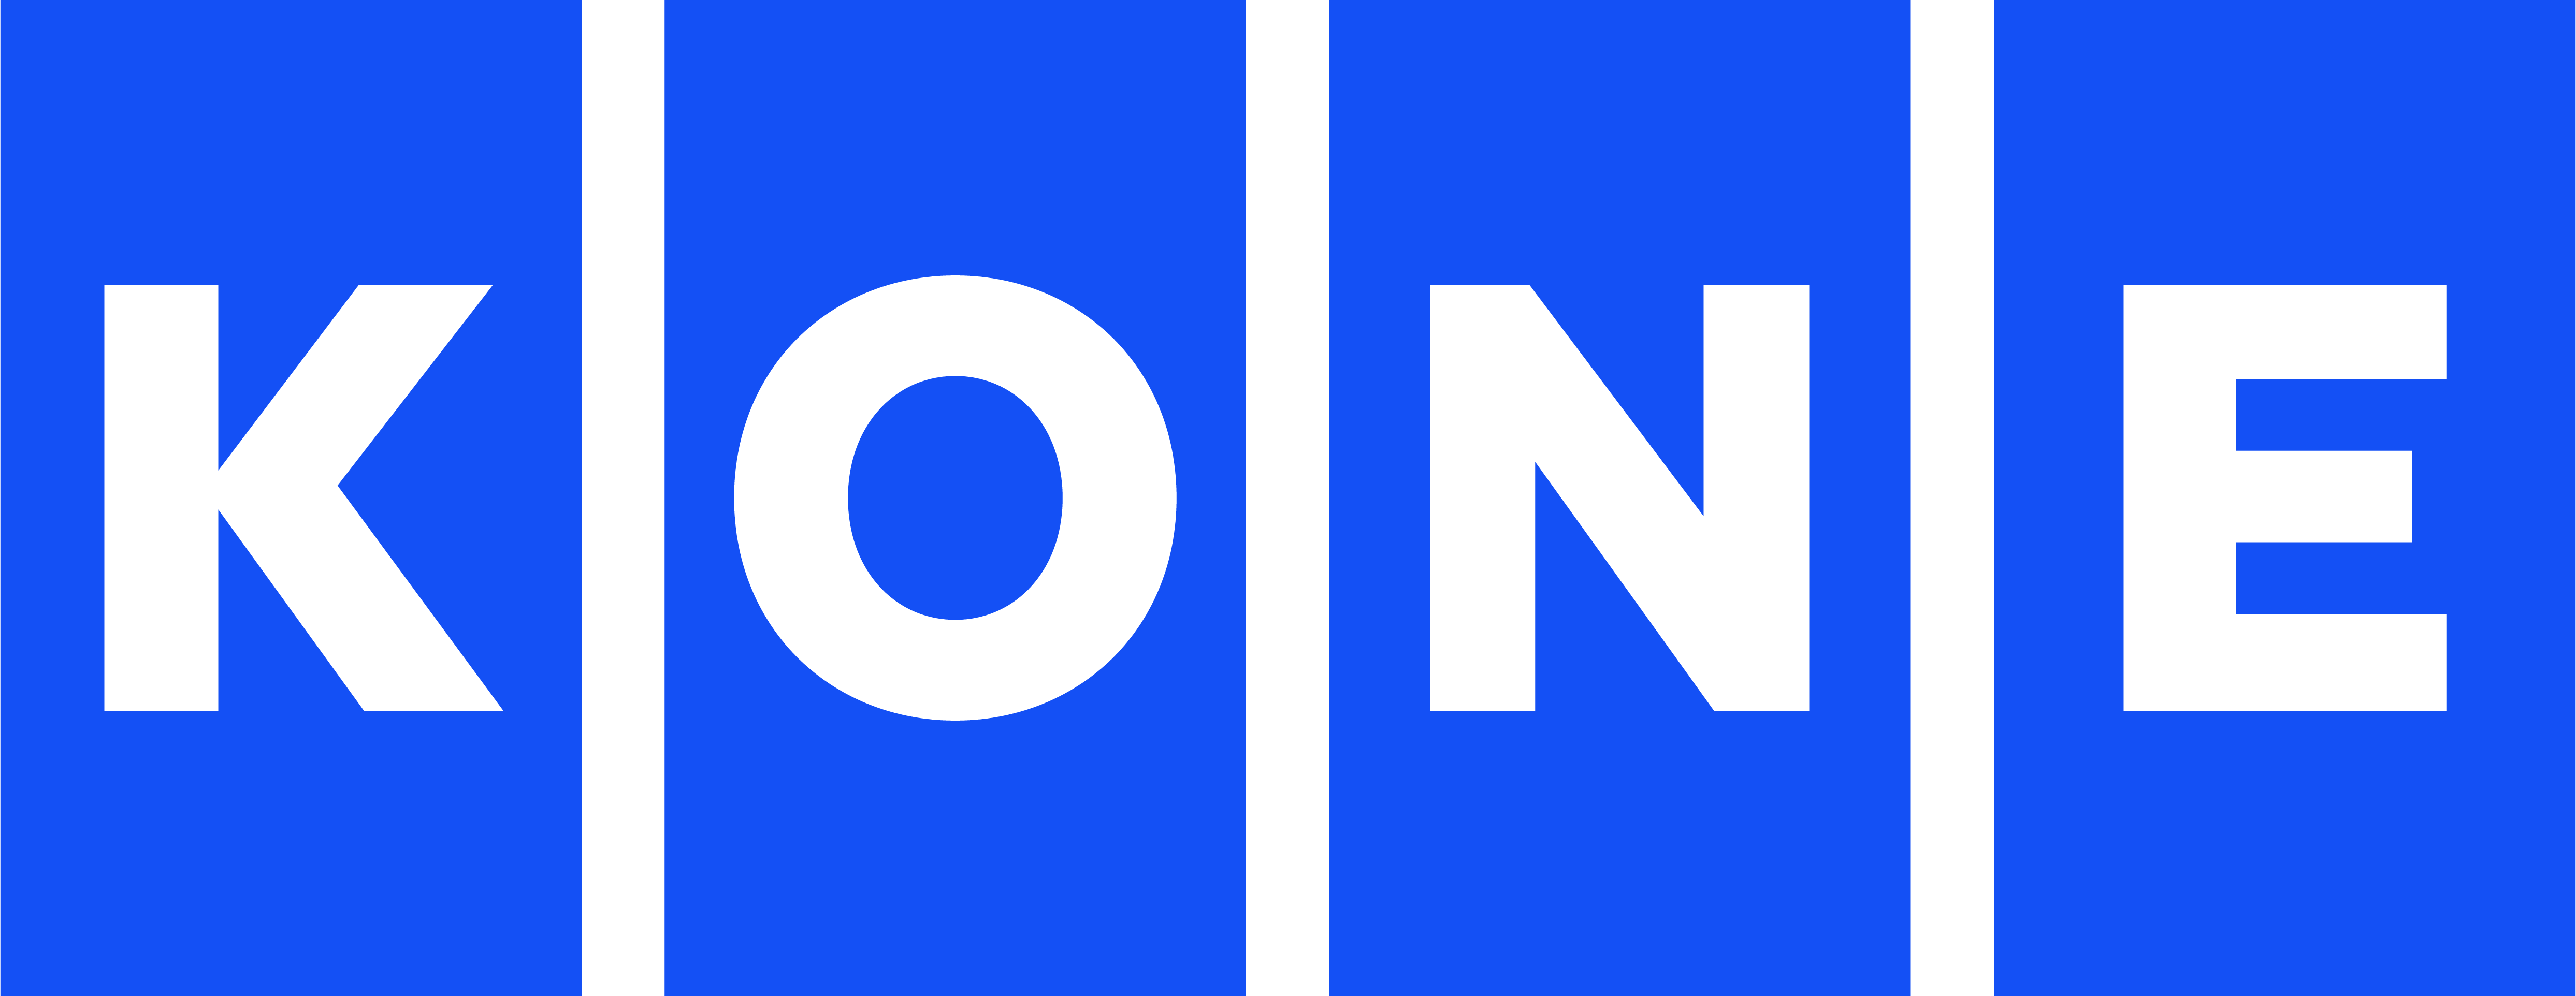 230 KONE Public Company Ltd logo